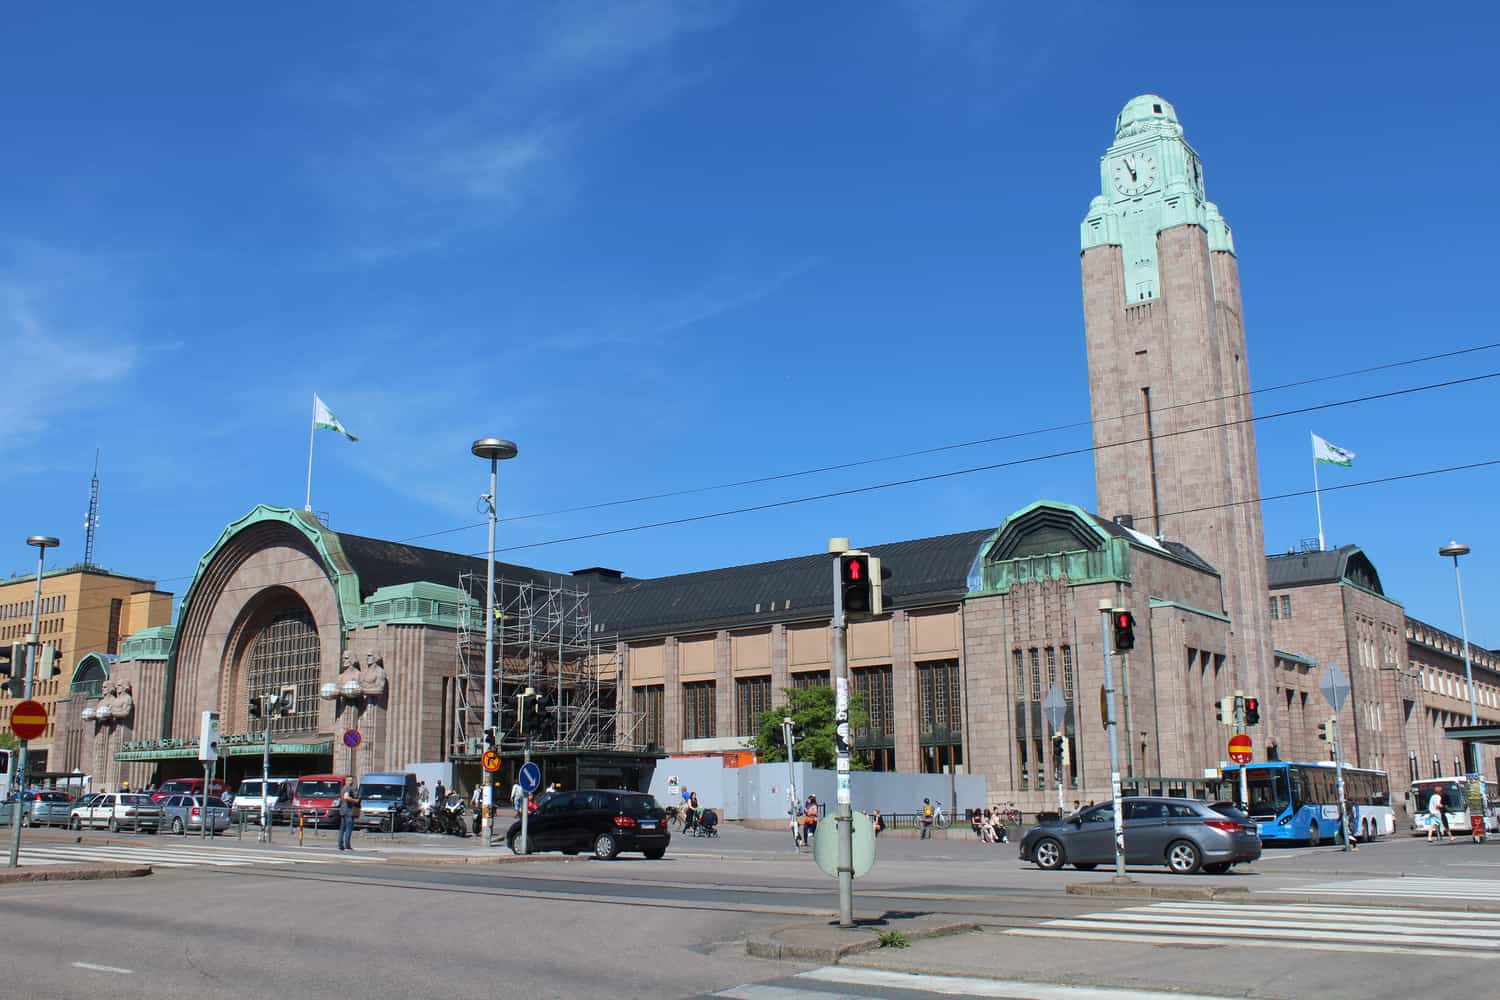 Helsinki railway station, Finland